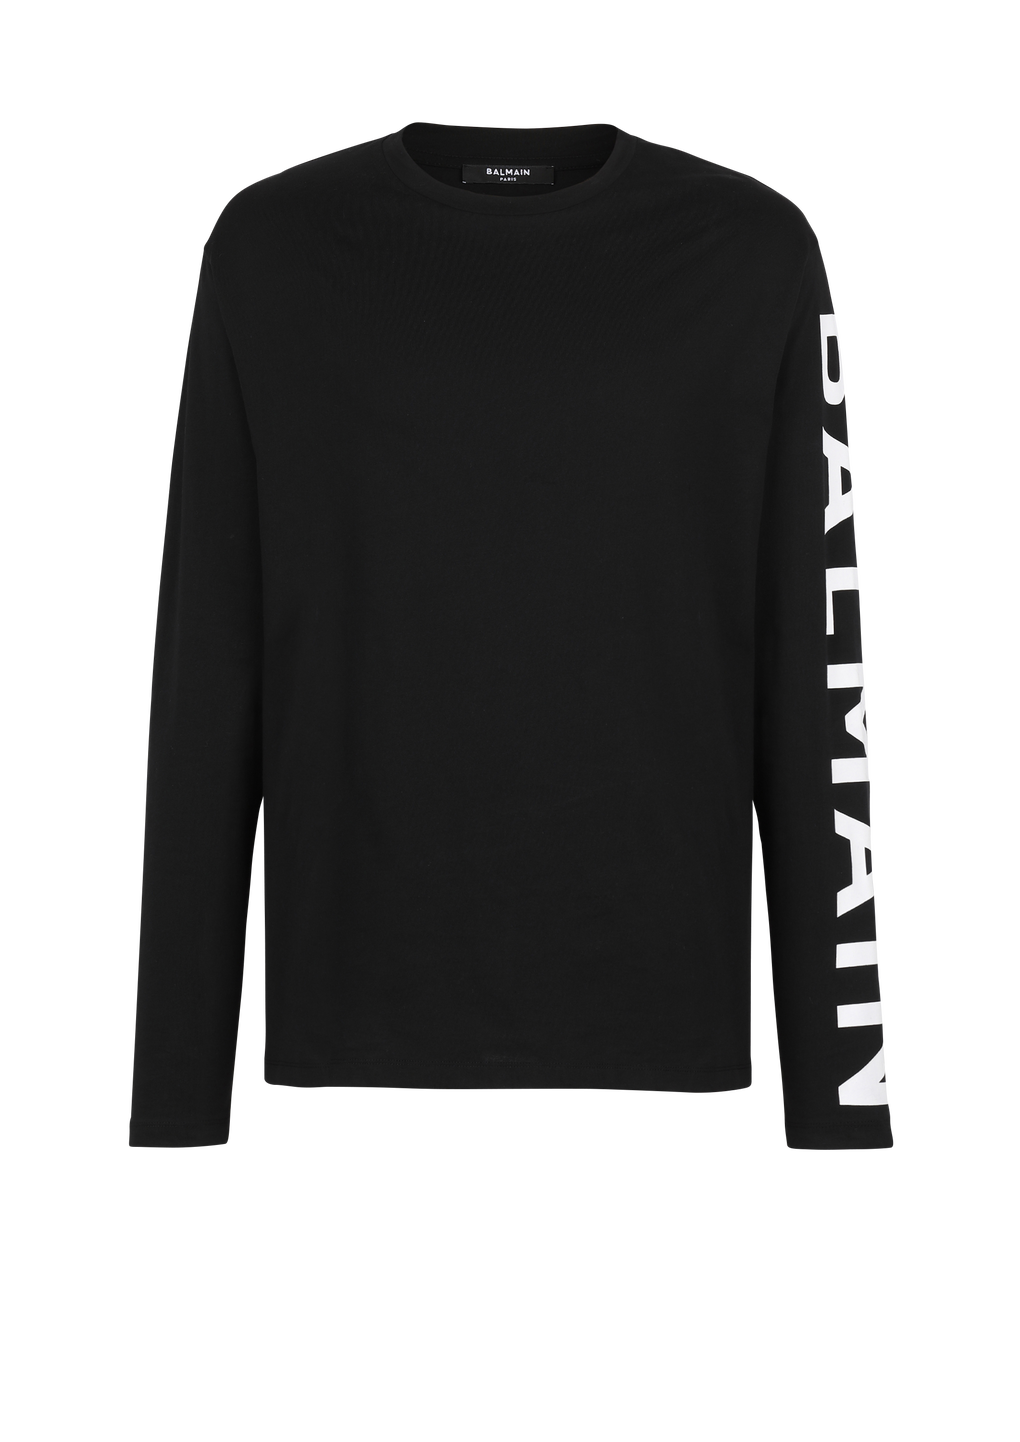 Long-sleeved cotton T-shirt with Balmain signature on sleeve, black, hi-res